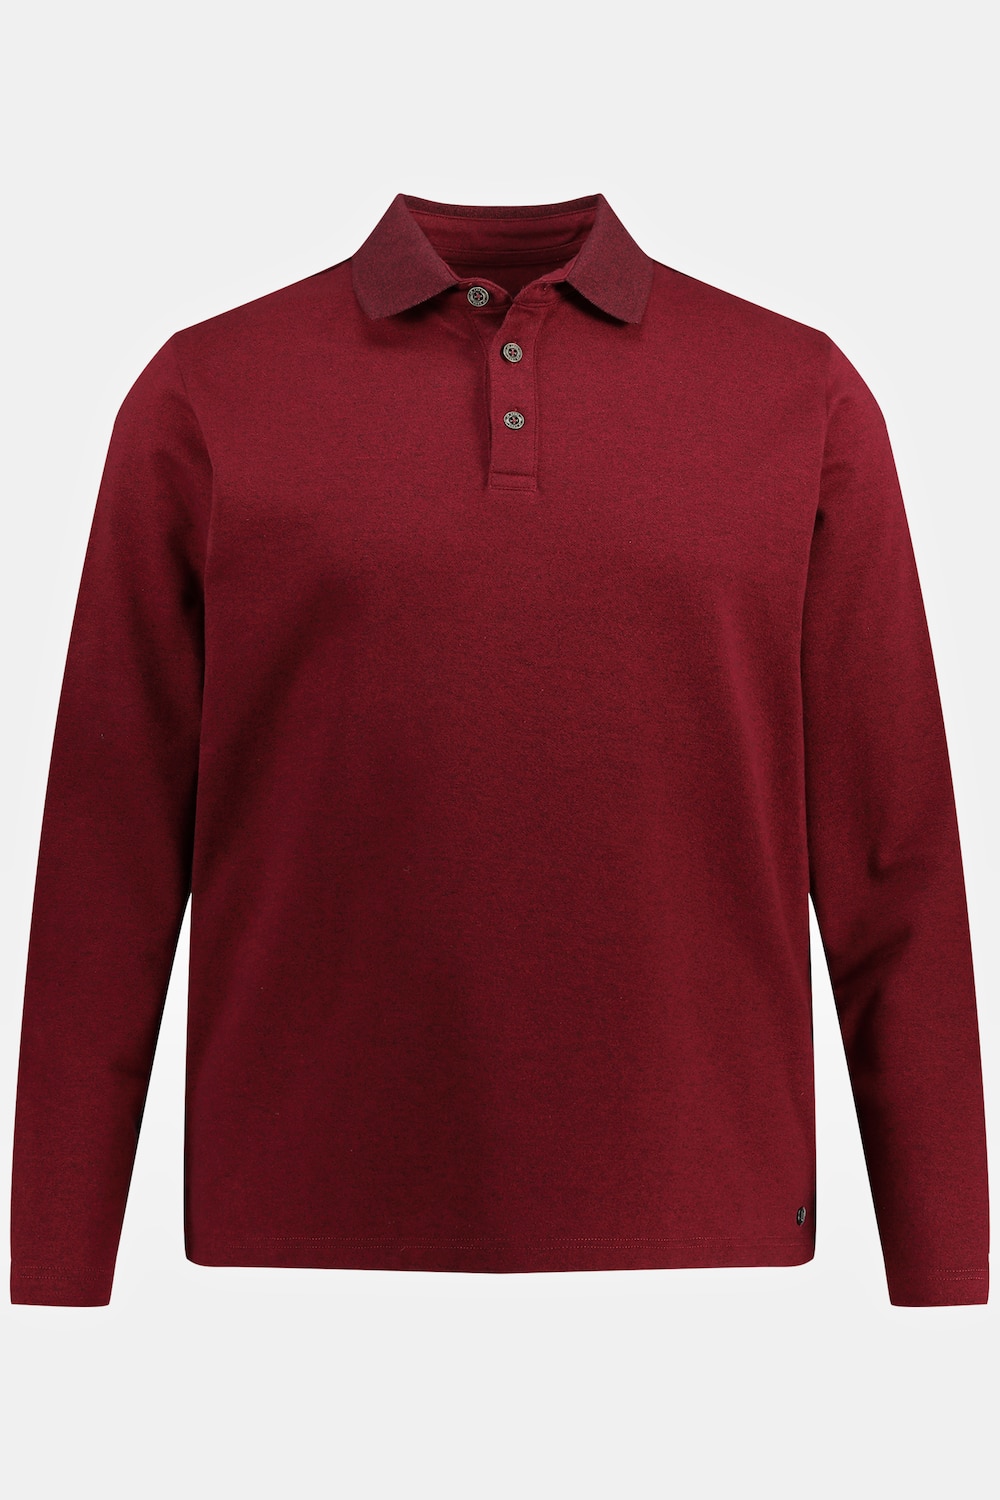 Grote Maten Poloshirt, Heren, rood, Maat: 6XL, Katoen, JP1880